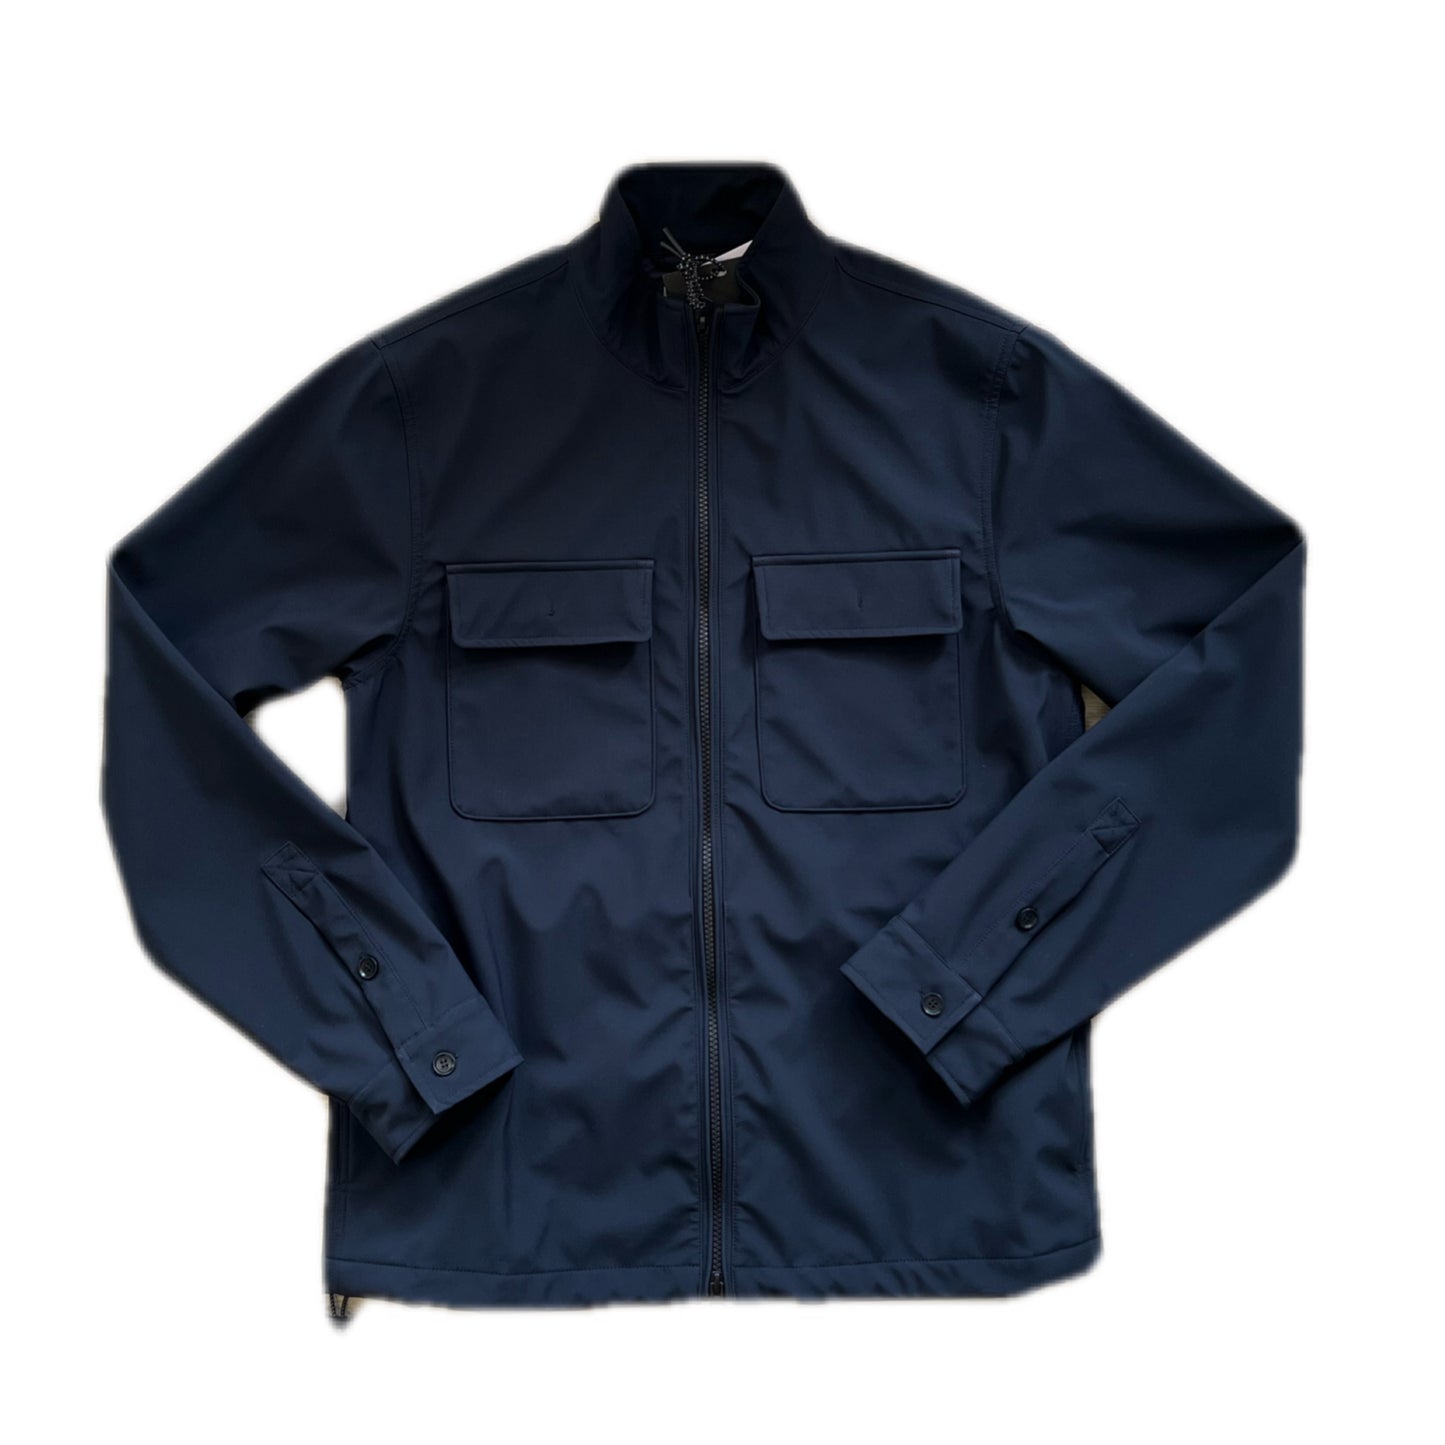 adhoc - Jacket Shirt Cobalto Blue